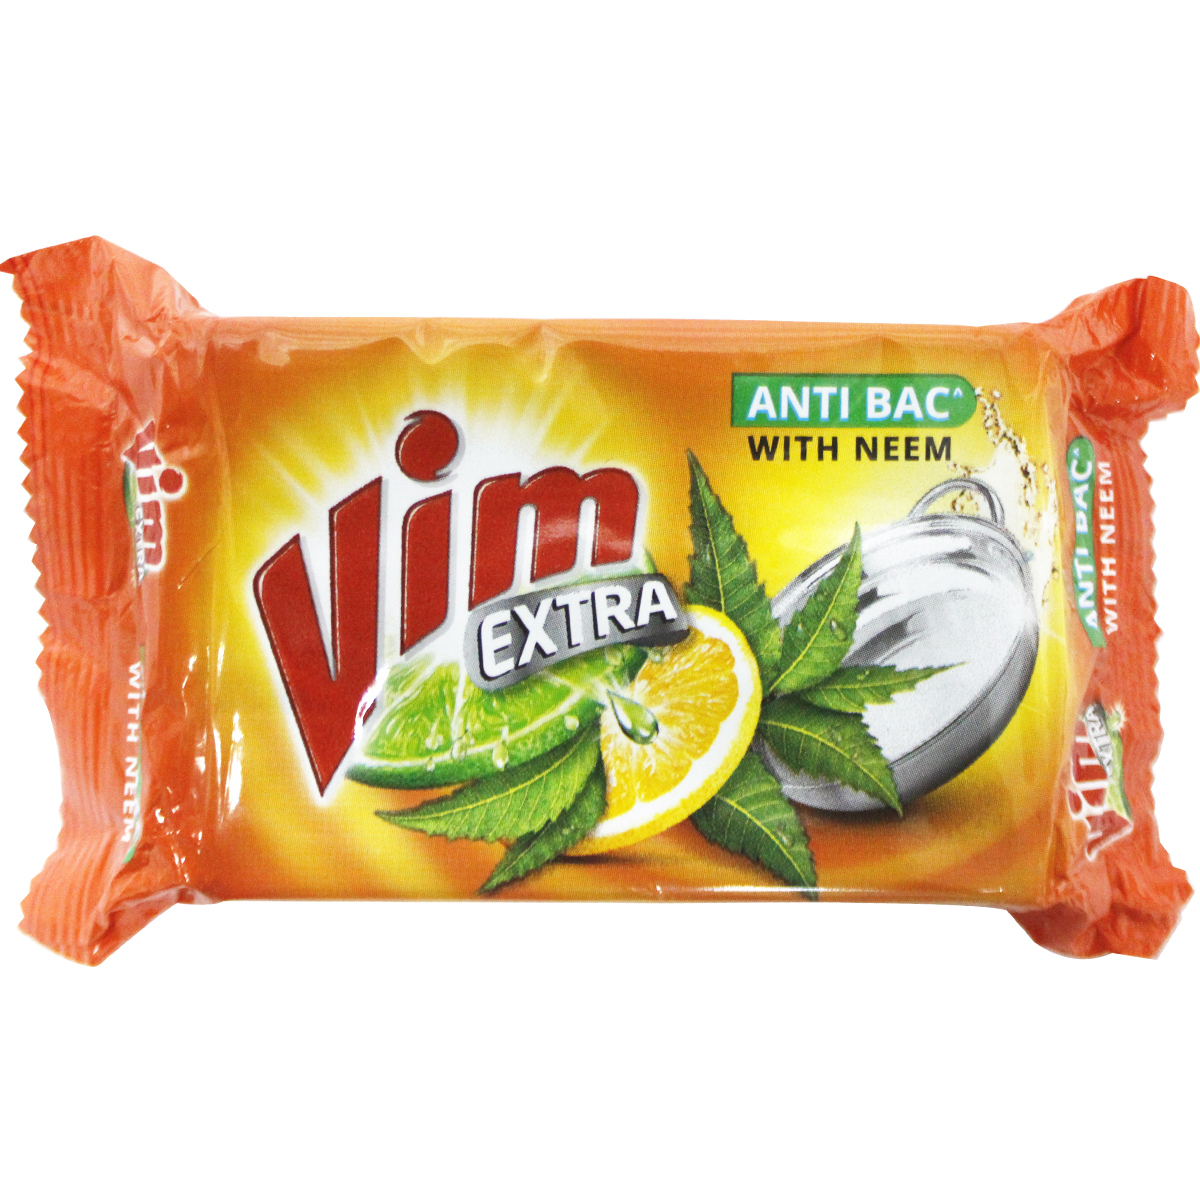 Vim Anti Bac With Neem 300g